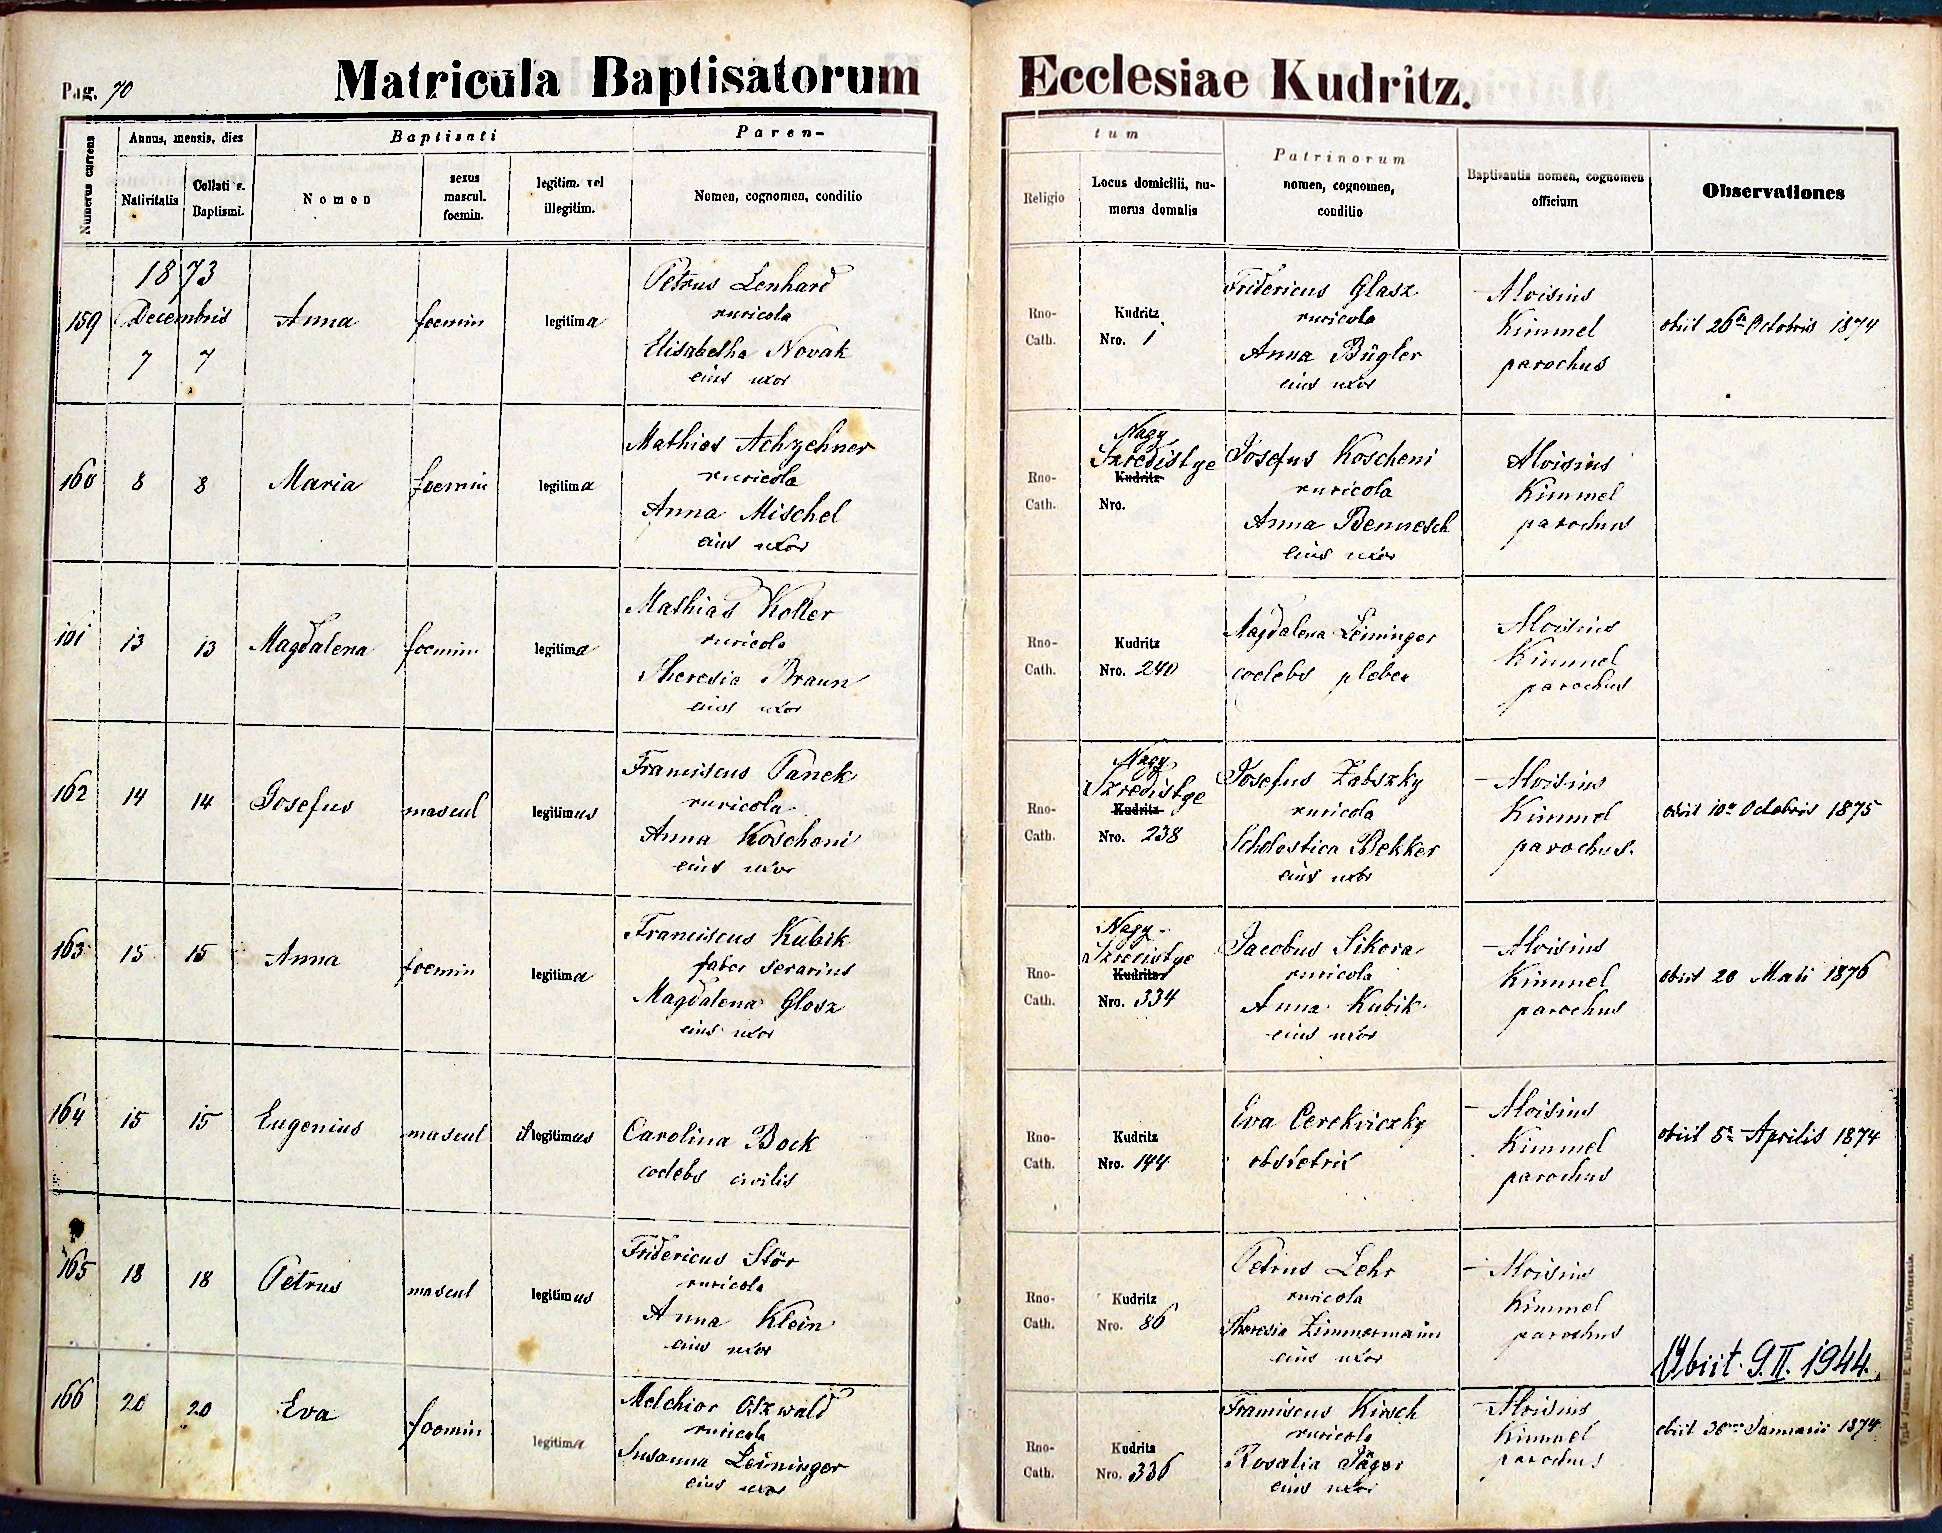 images/church_records/BIRTHS/1884-1899B/1888/070